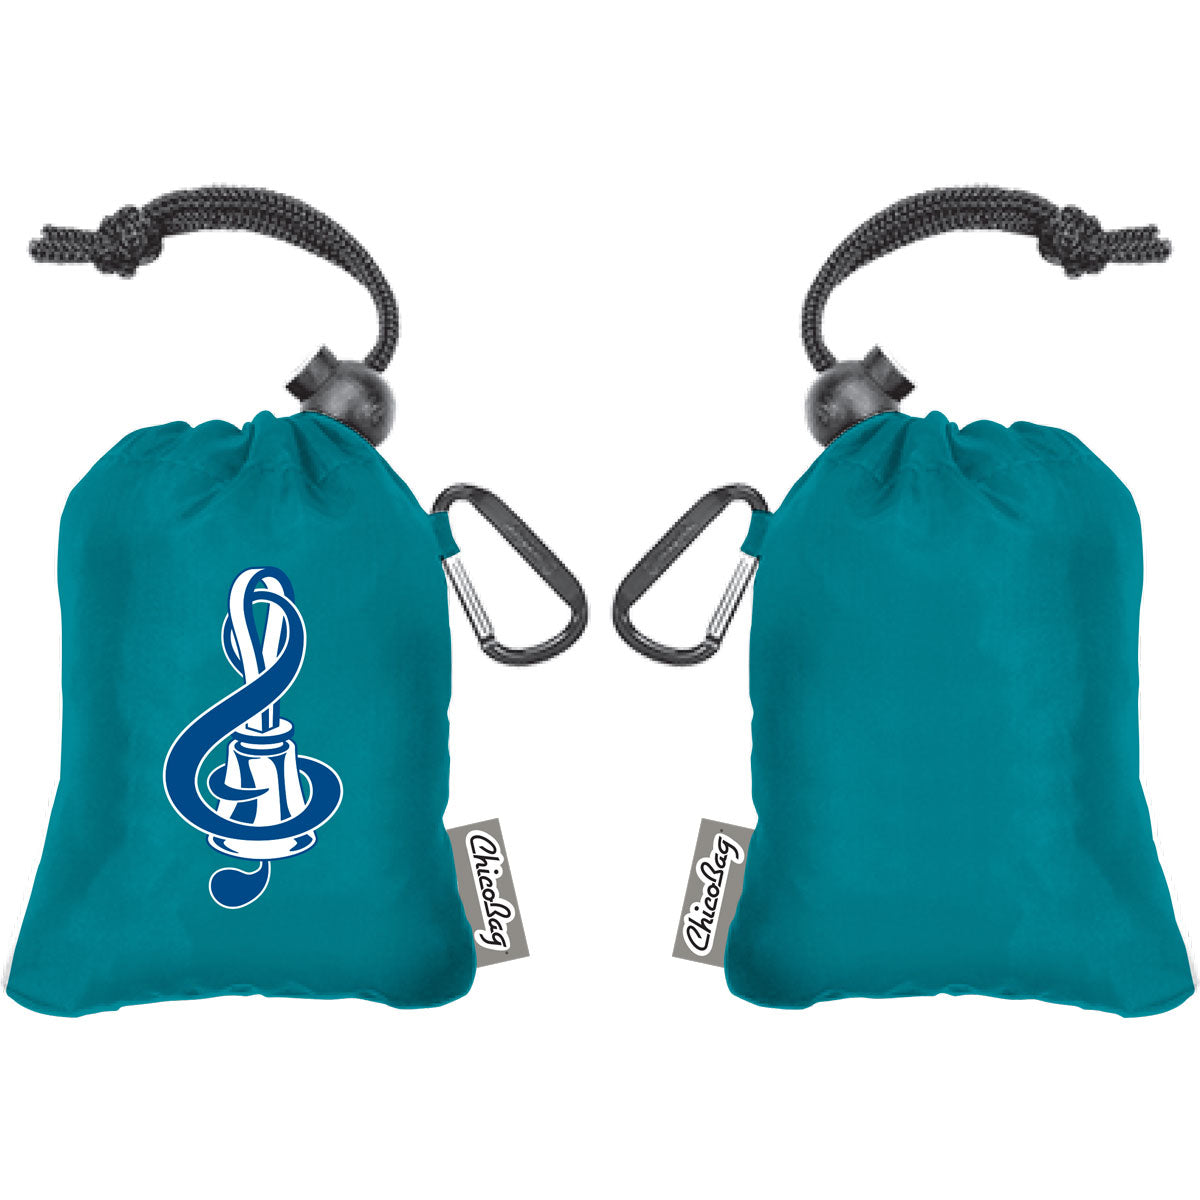 Reusable Tote Bag - handbell w/ treble clef design